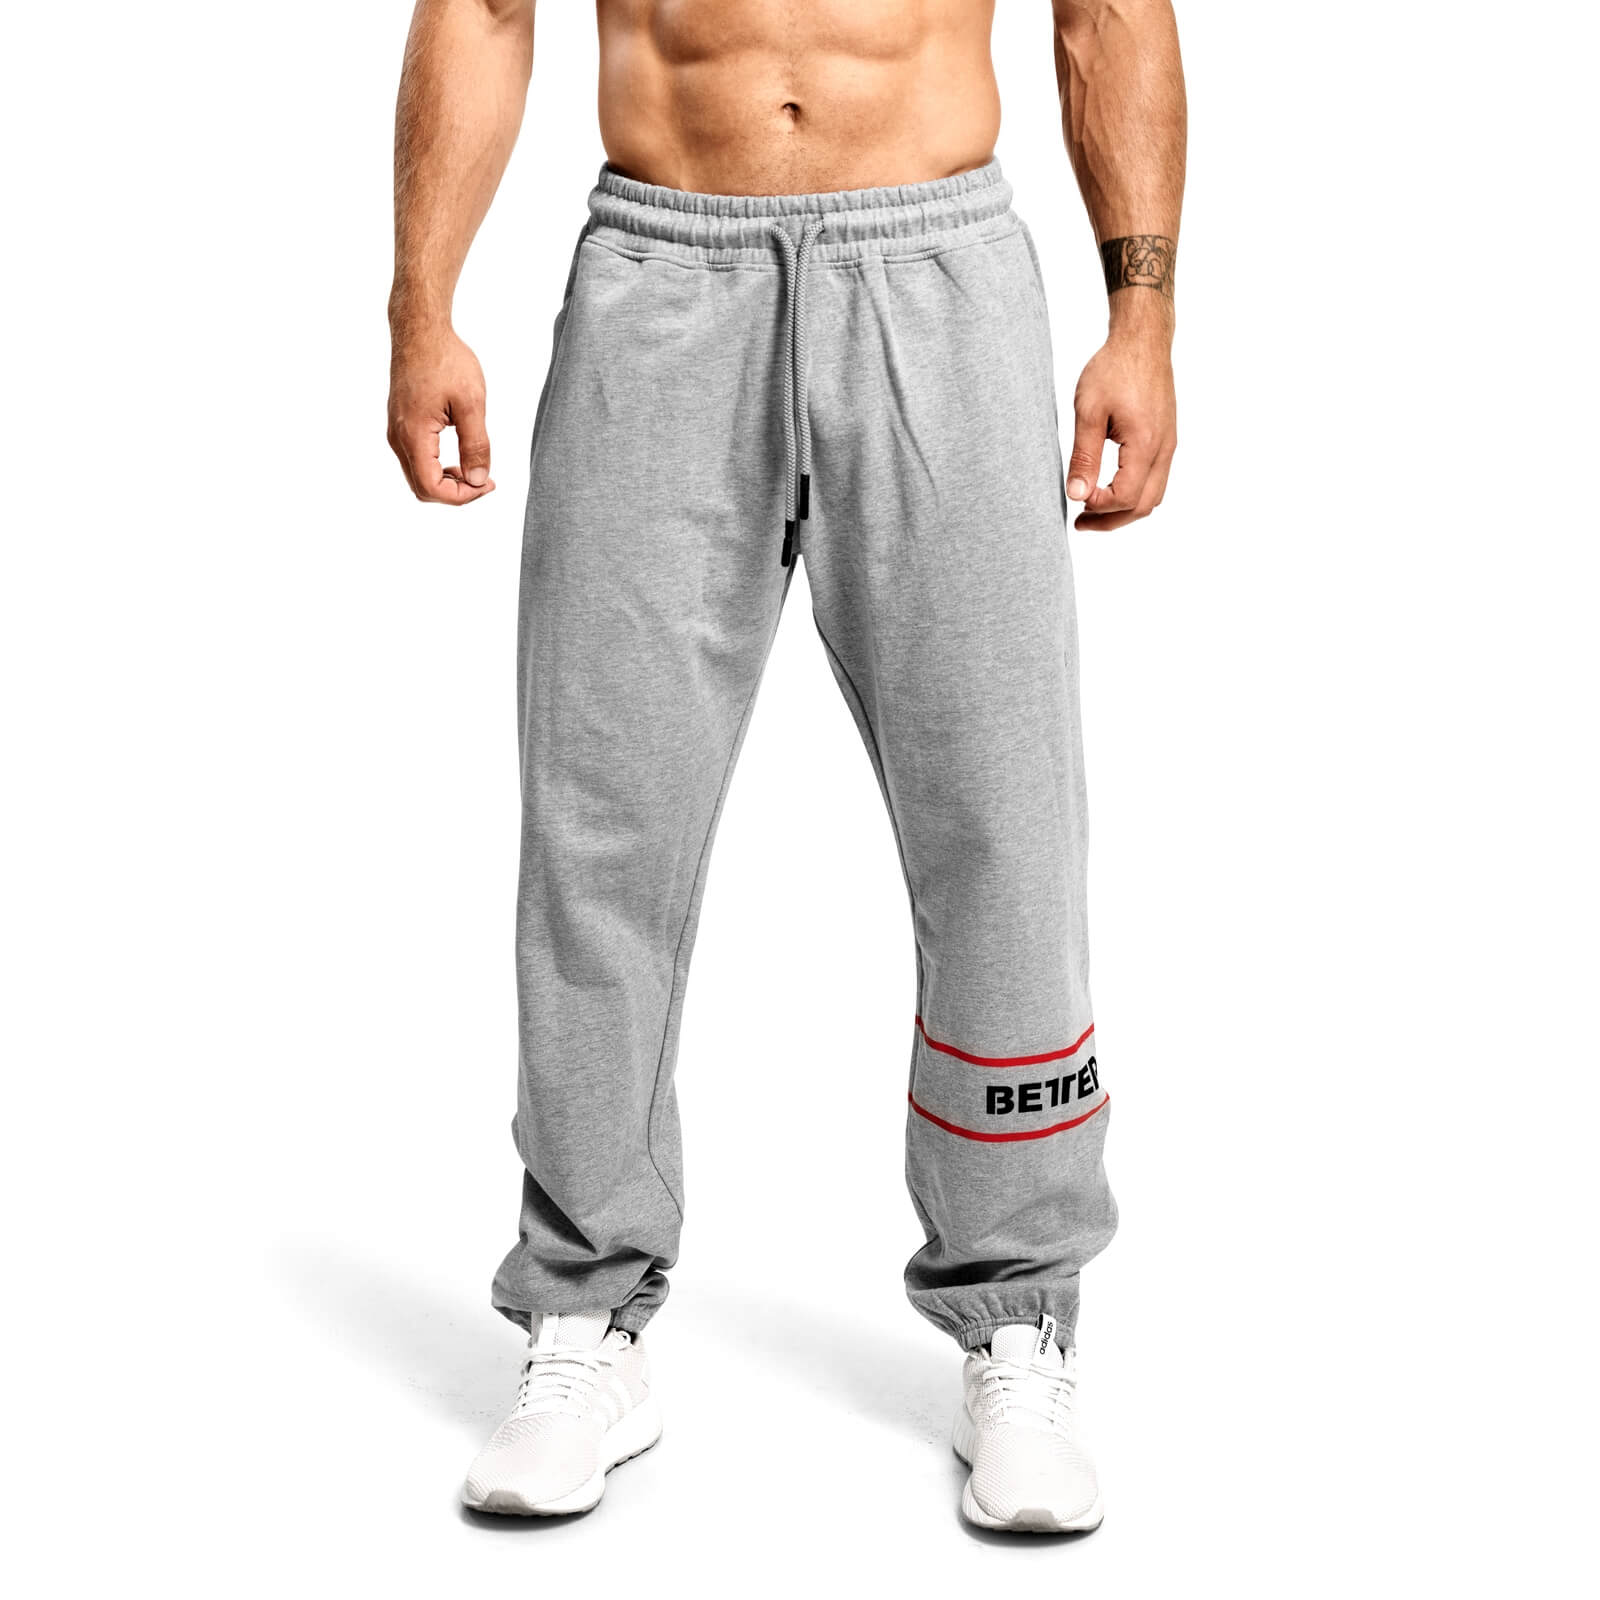 Tribeca Sweat Pants, grey melange, Better Bodies